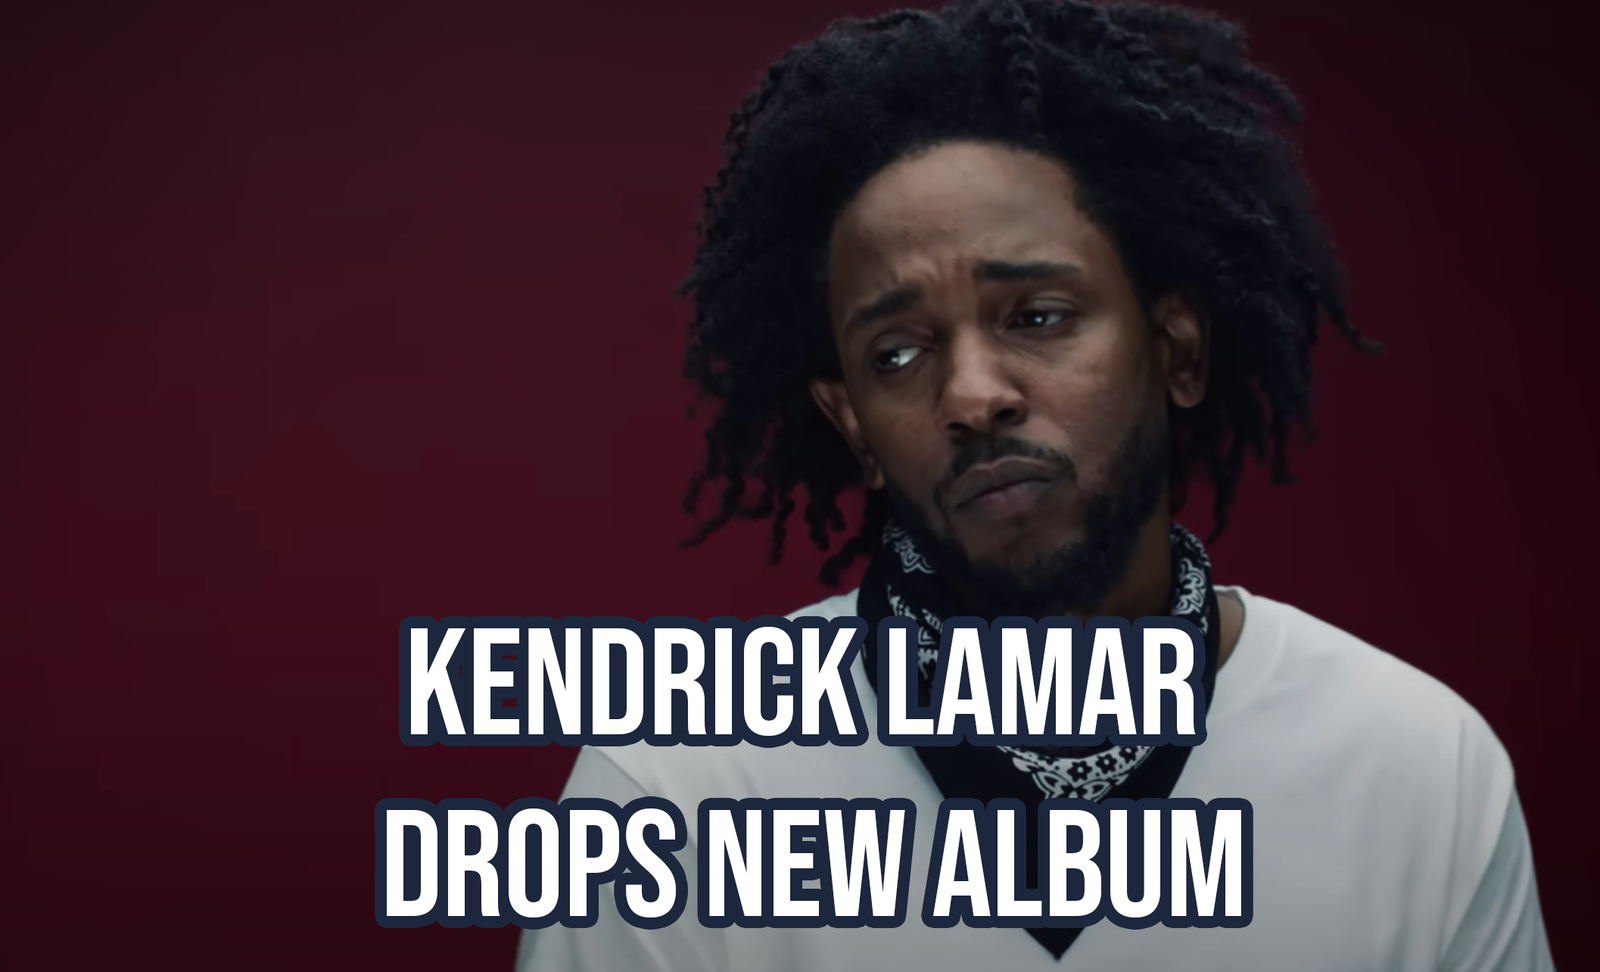 Kendrick Lamar drops first album in several years